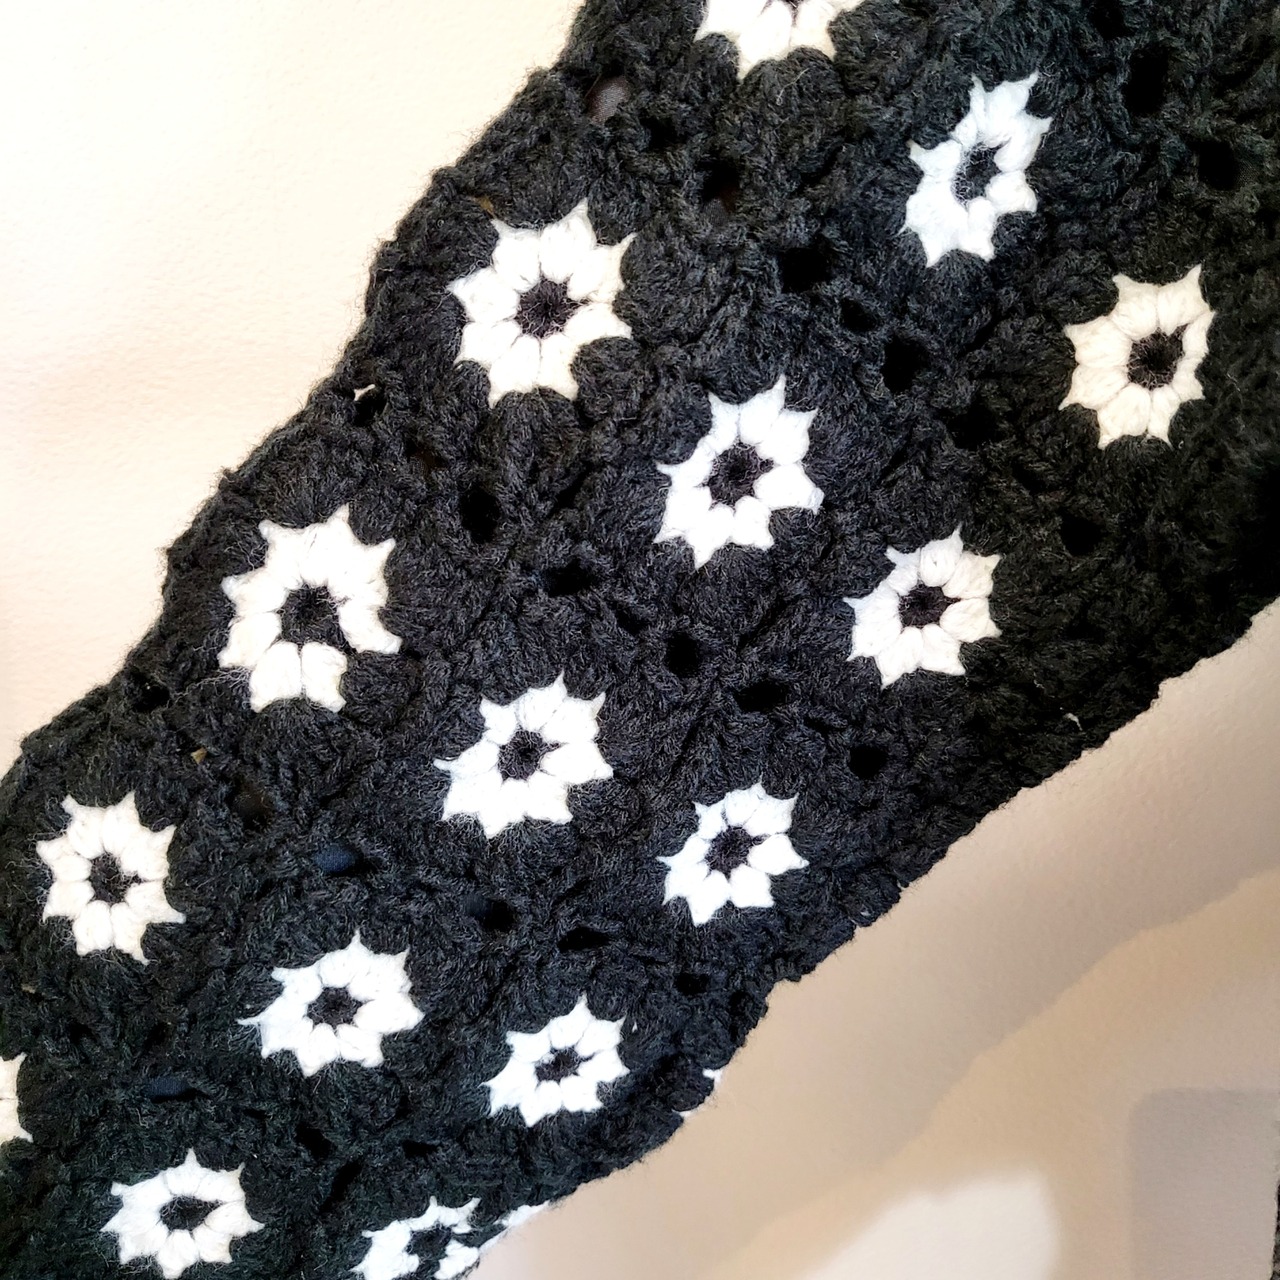 【over print】Crochet knitting Shirts (cream / black)